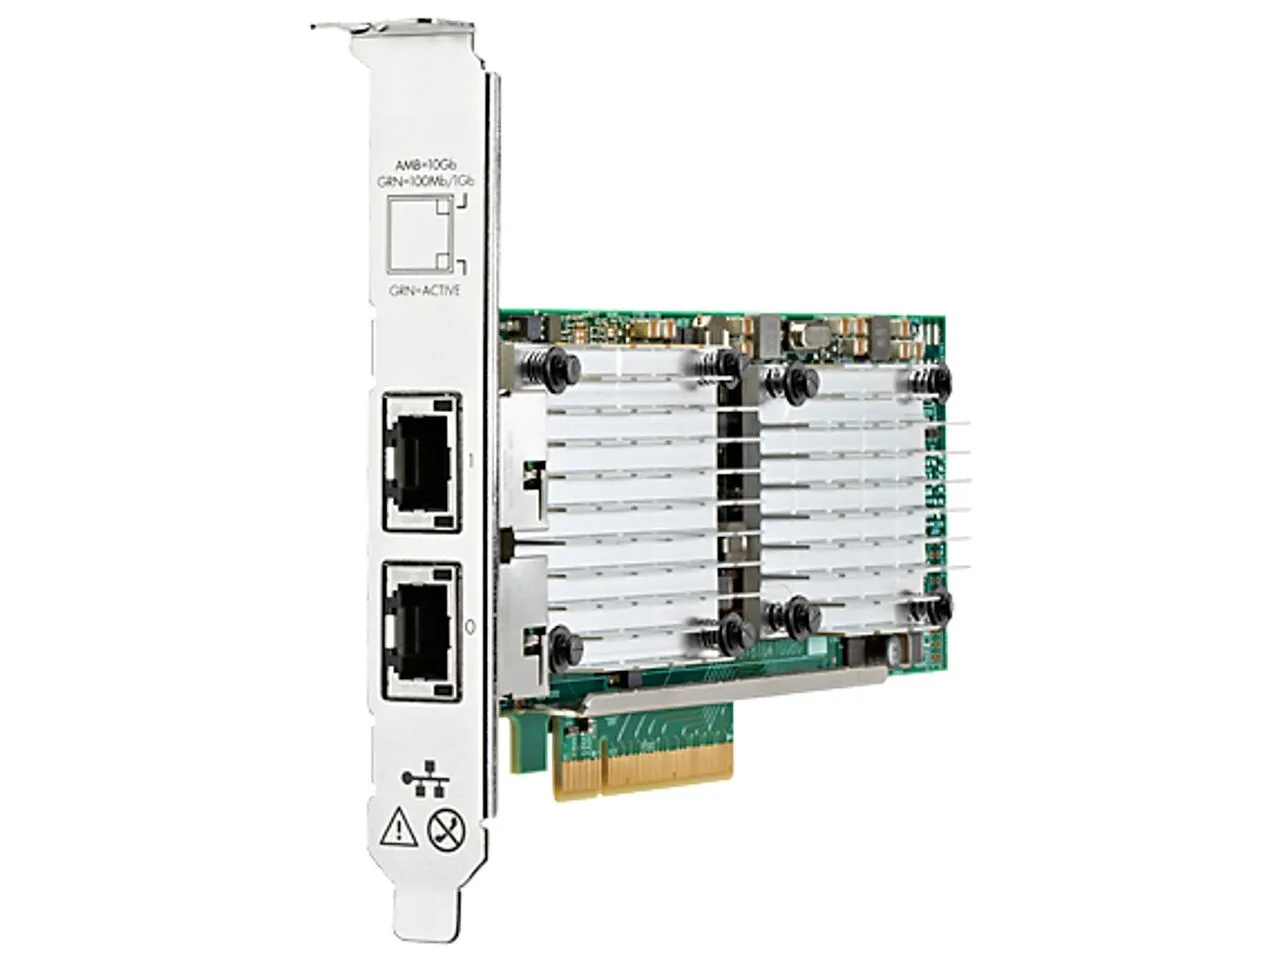   Network Adapter 657128-002 for HPE Proliant DL560 Gen8 Server 